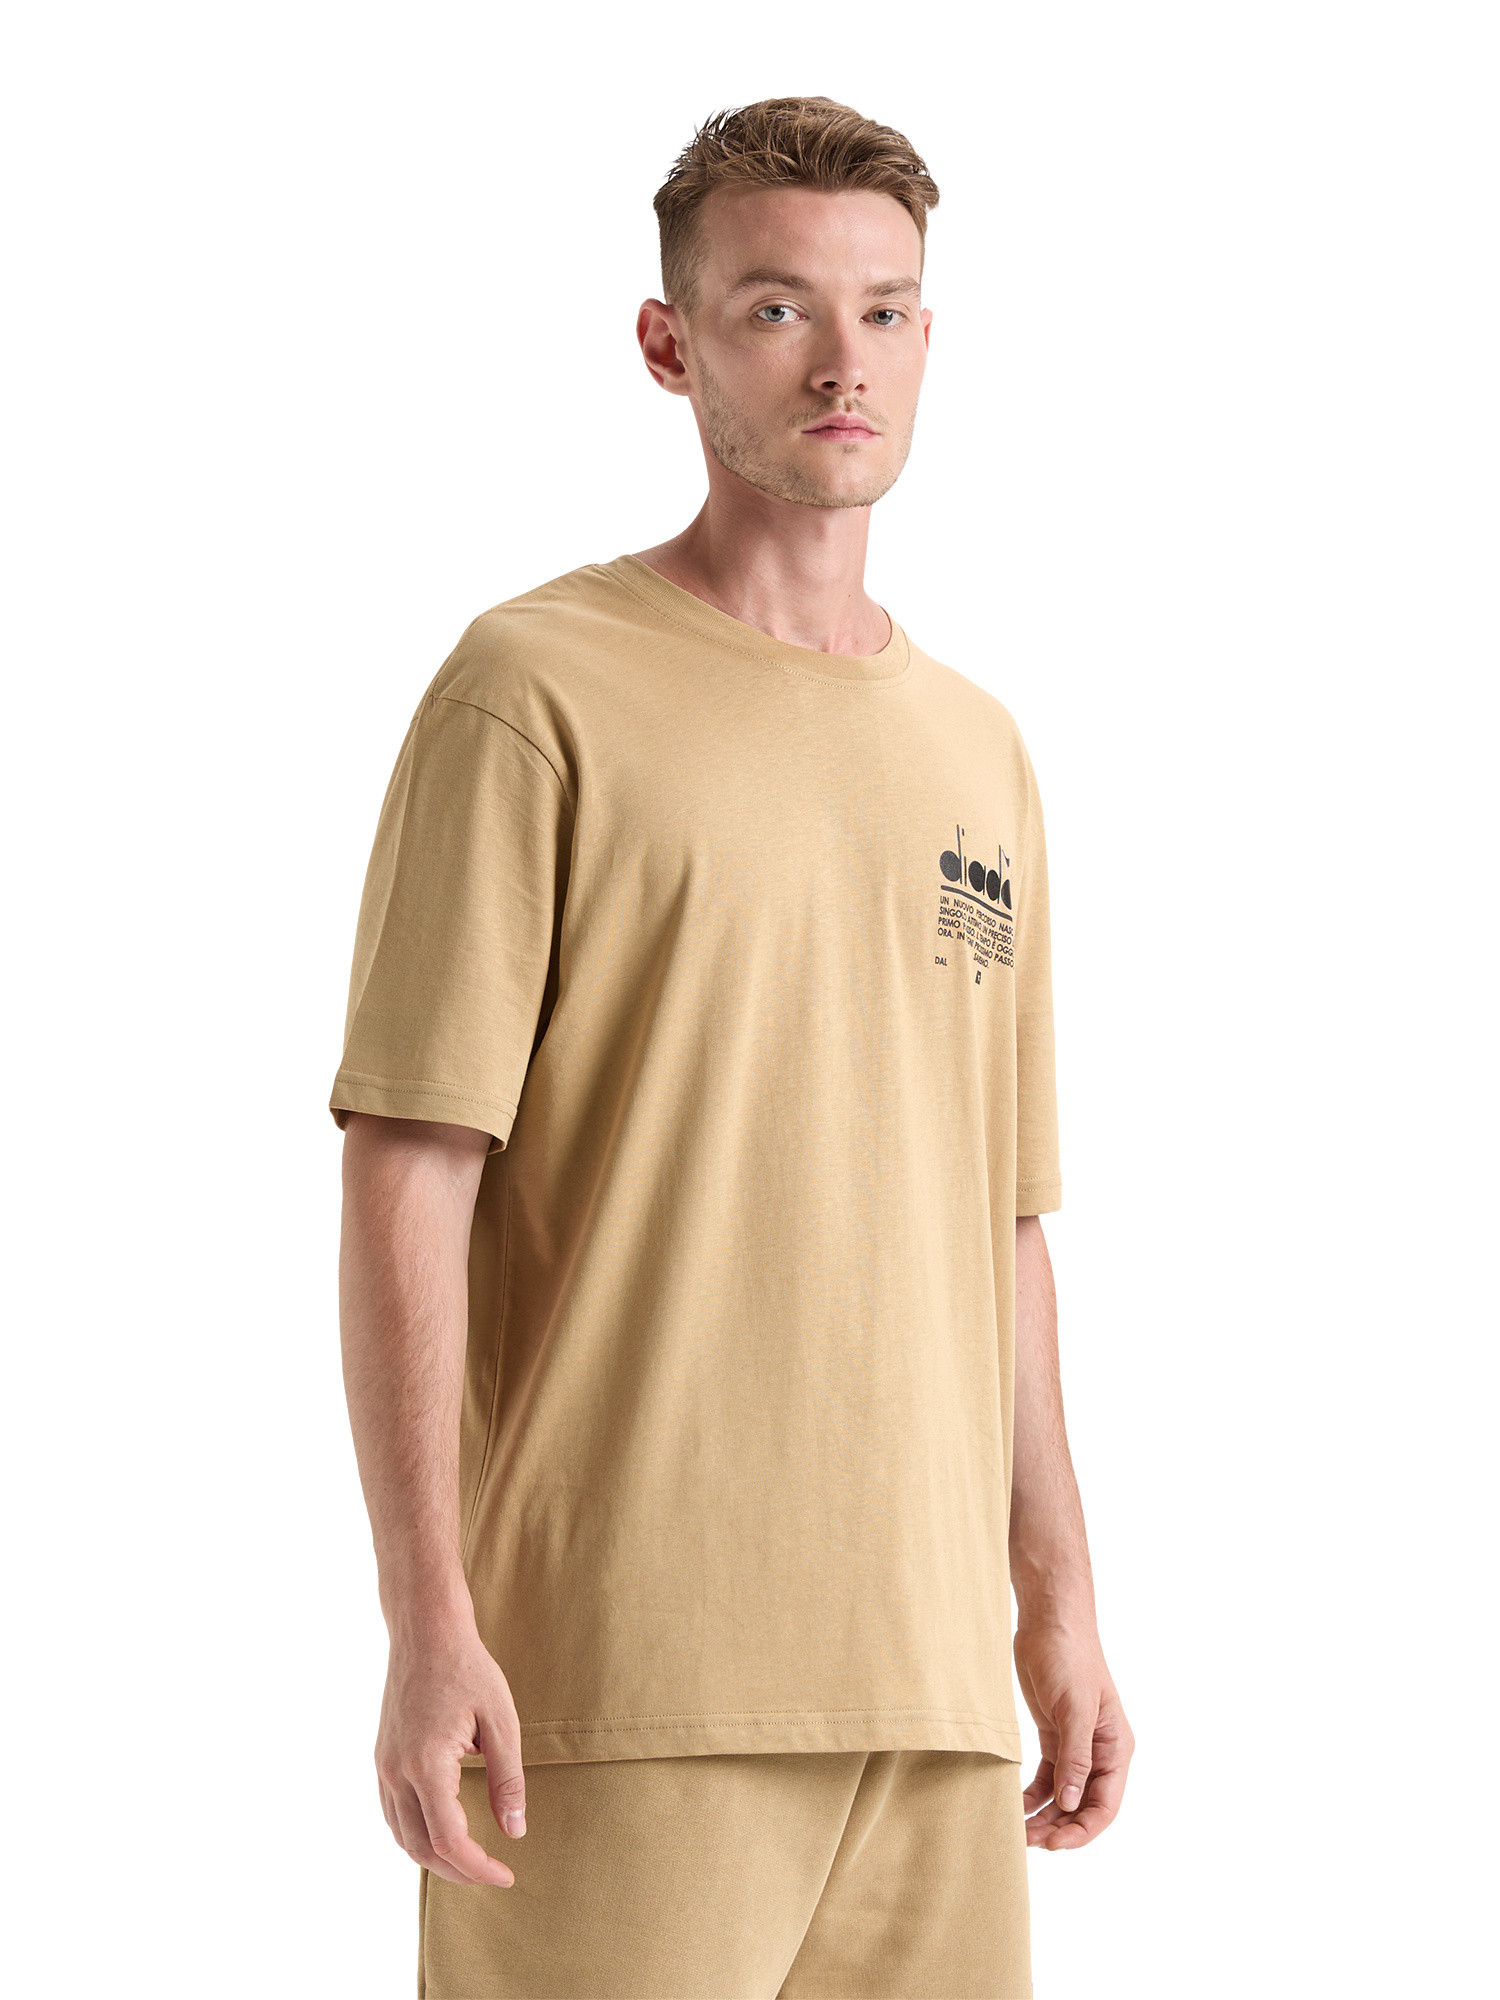 Diadora - T-shirt girocollo Manifesto in cotone, Beige, large image number 2